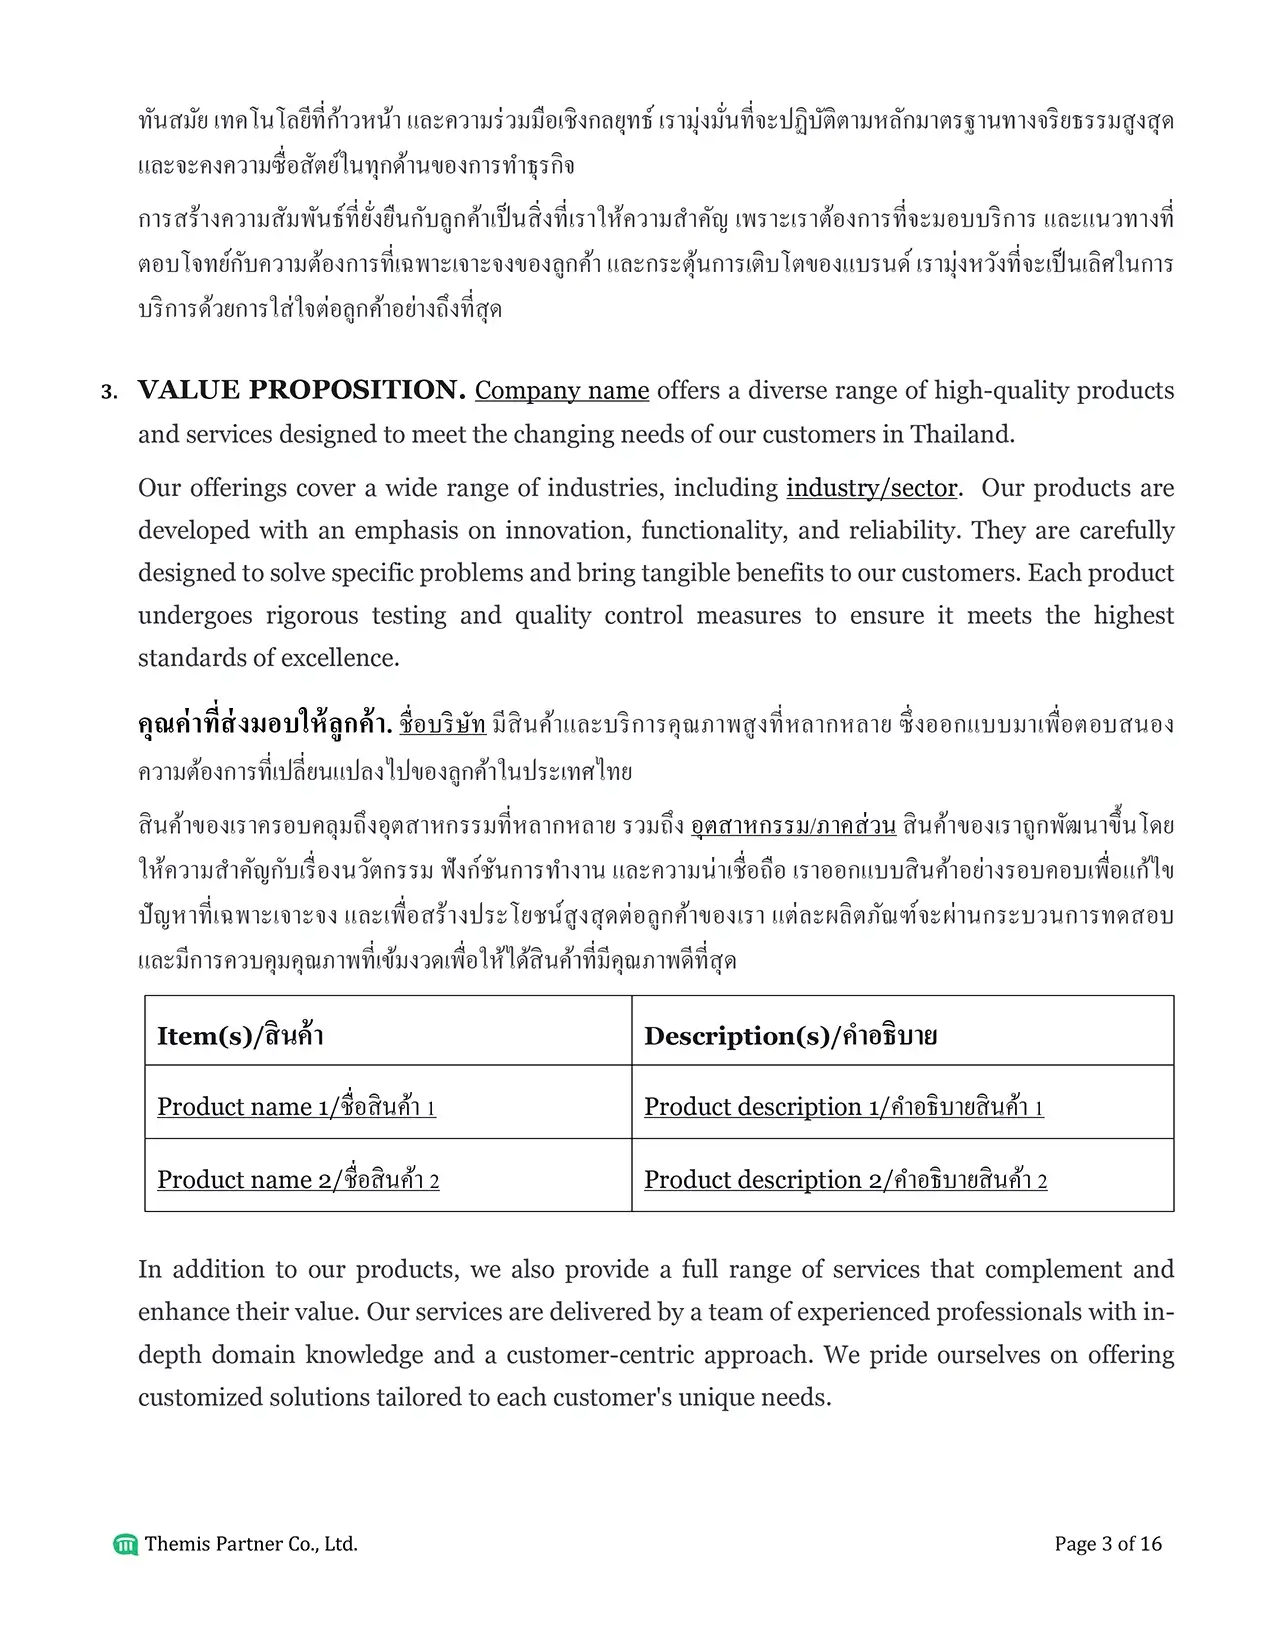 Business plan Thailand 3